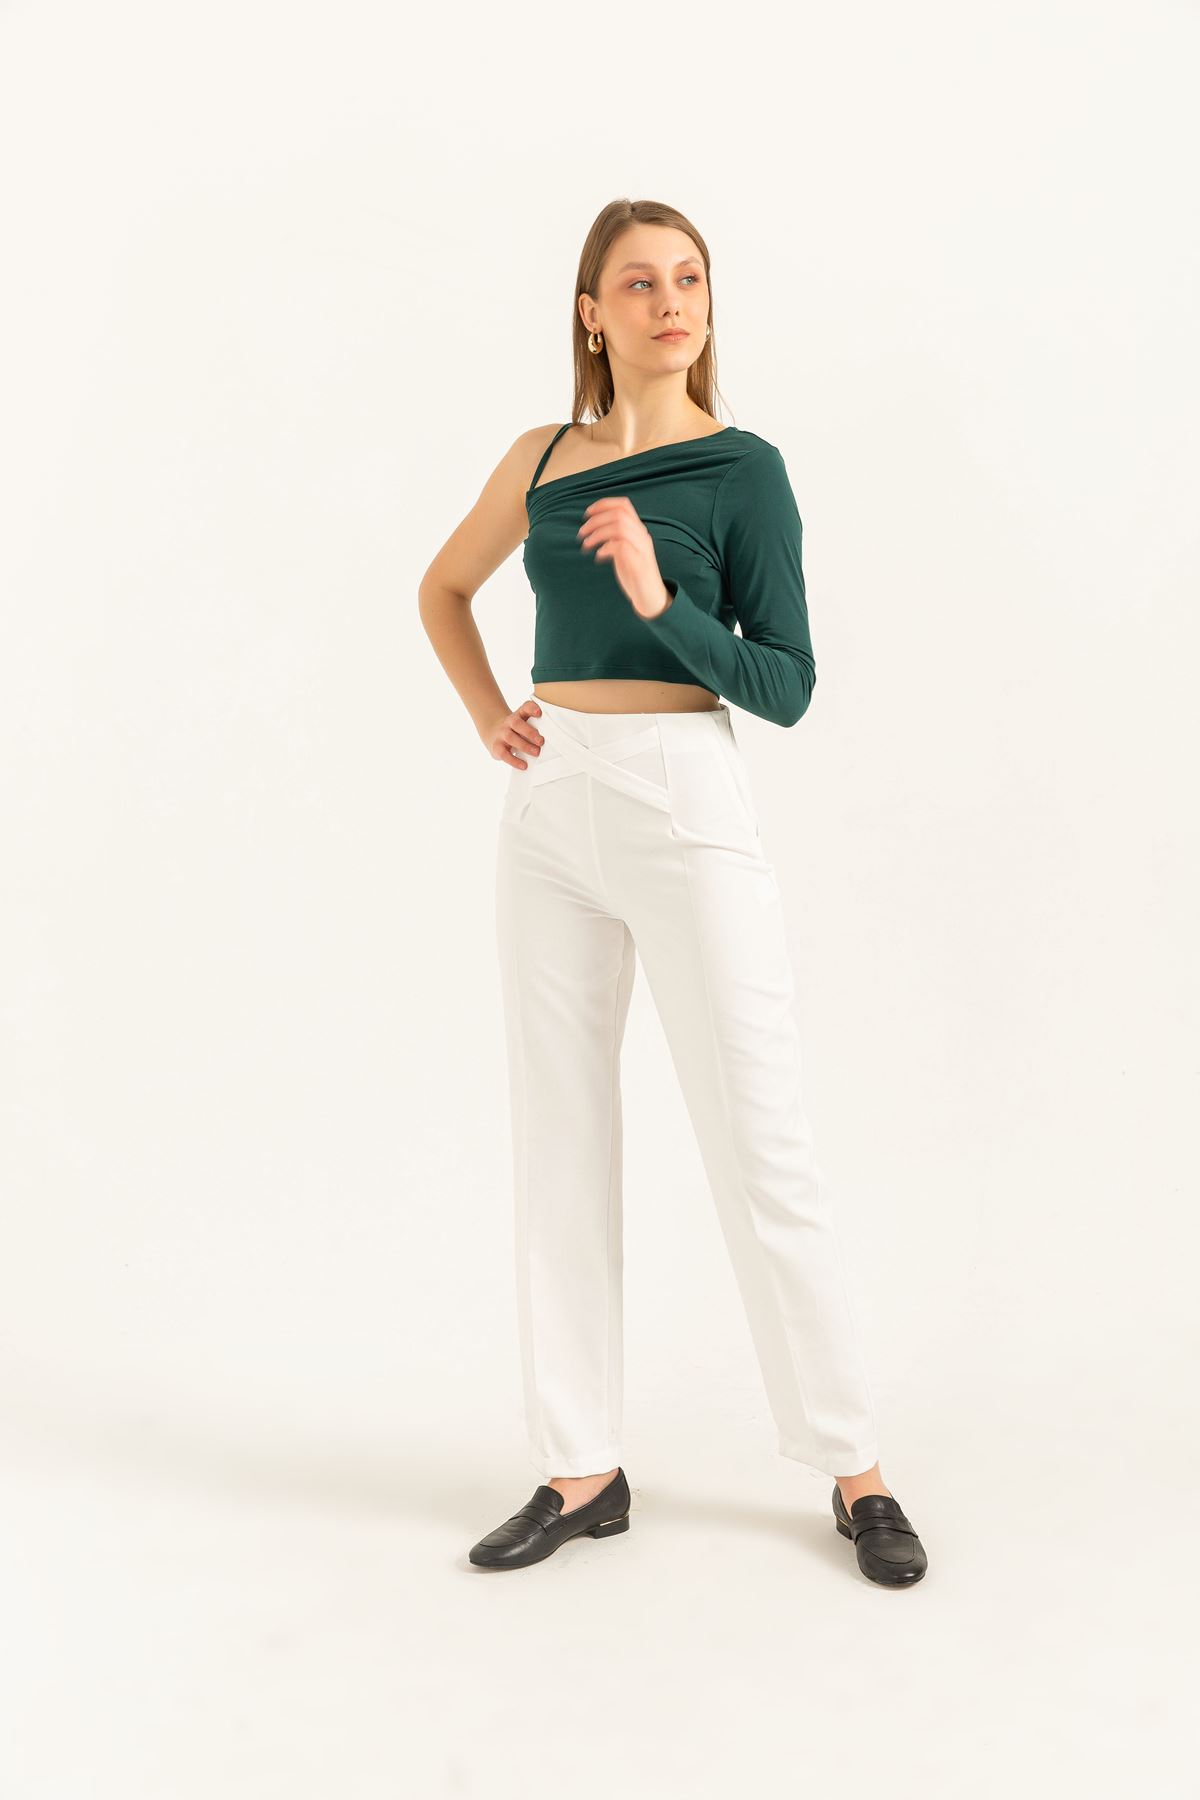 Sandy Fabric Long Sleeve Shoulder detailed Women Blouse-Emerald Green